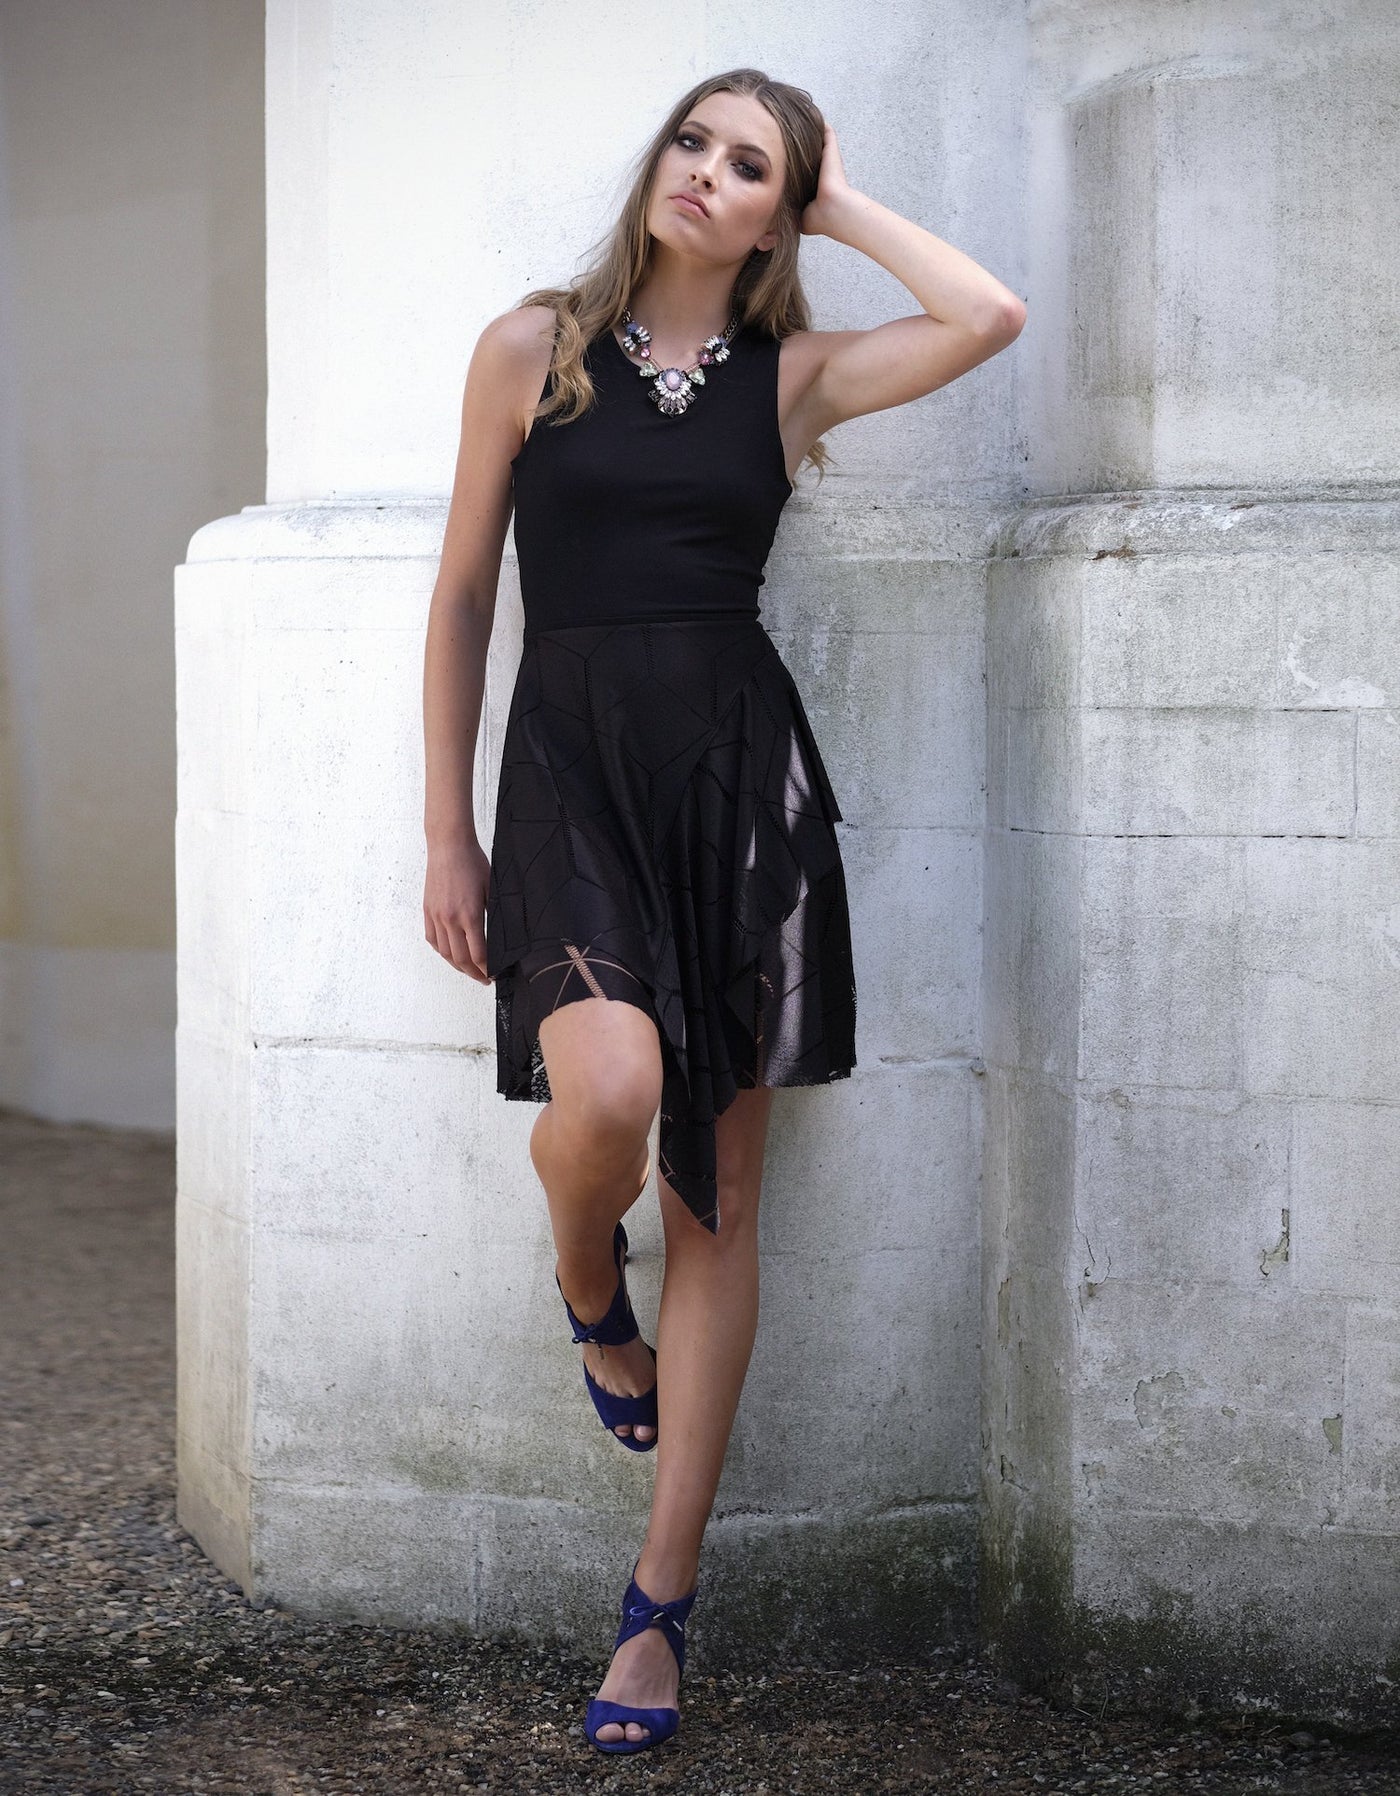 Sienna - Black Jersey-Lace Dress - The Clothing LoungeArzu Kara